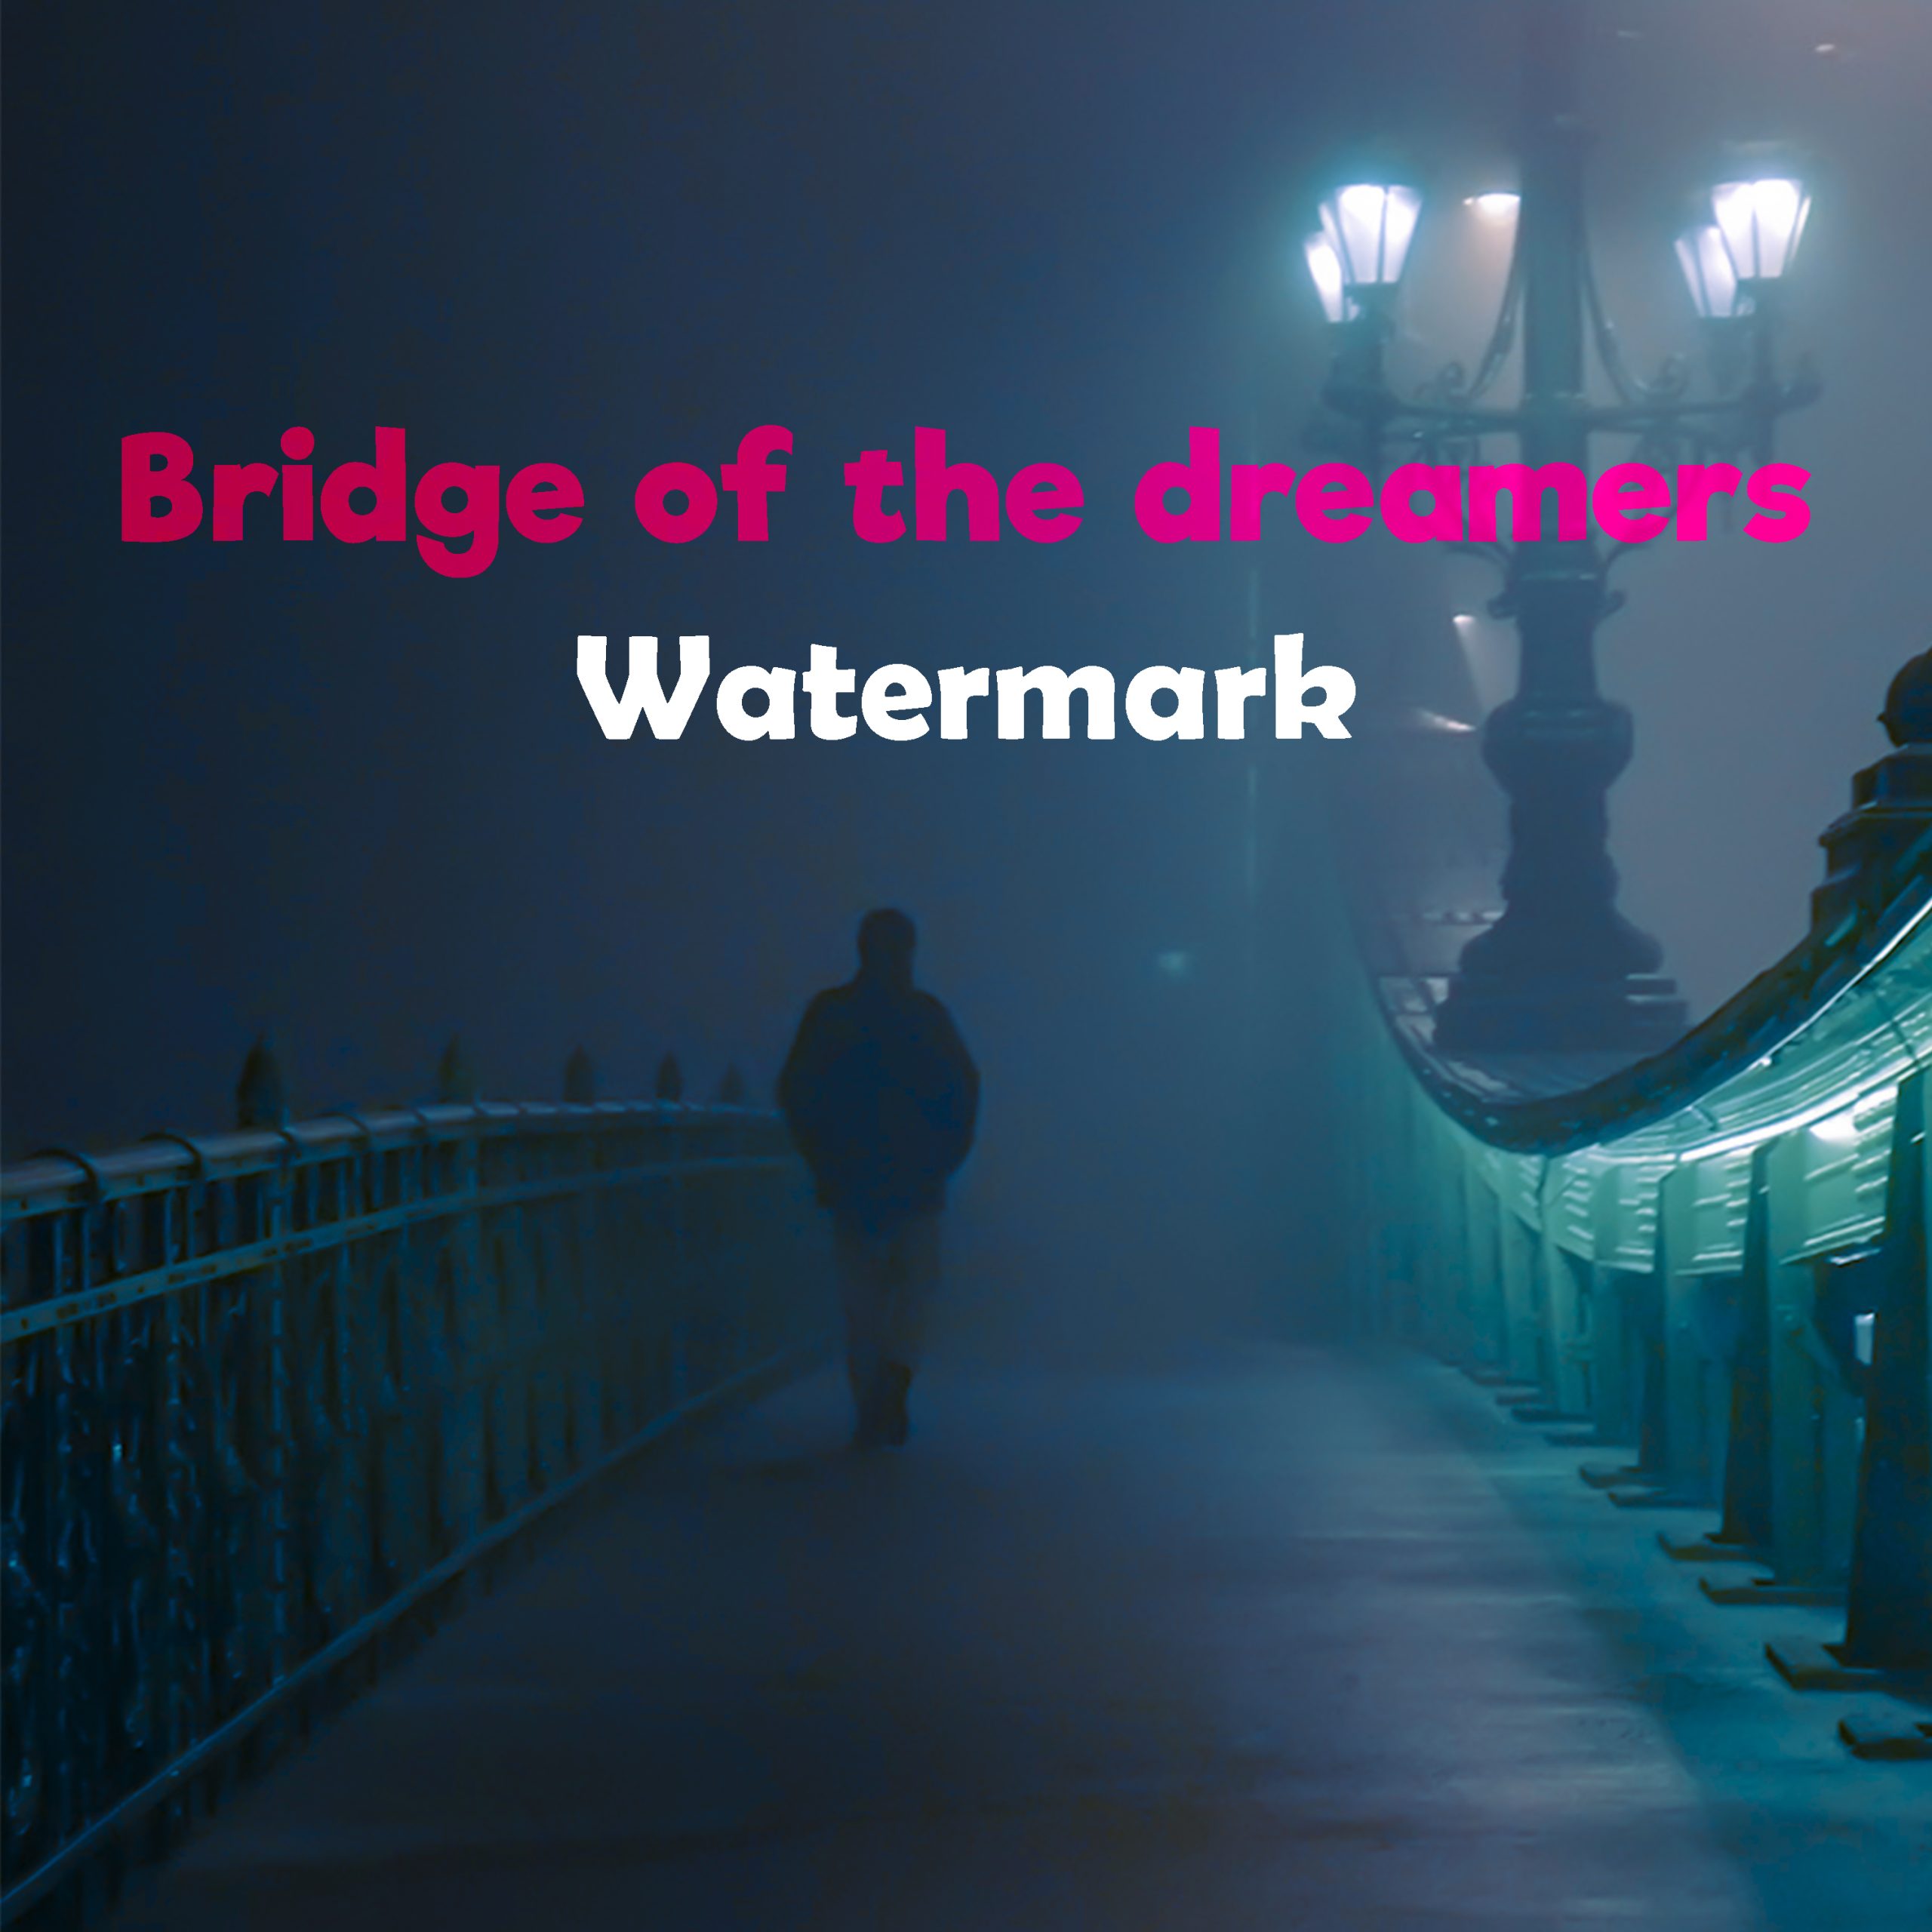 Watermark-Bridge-of-the-dreamers-COVER-scaled-1.jpg